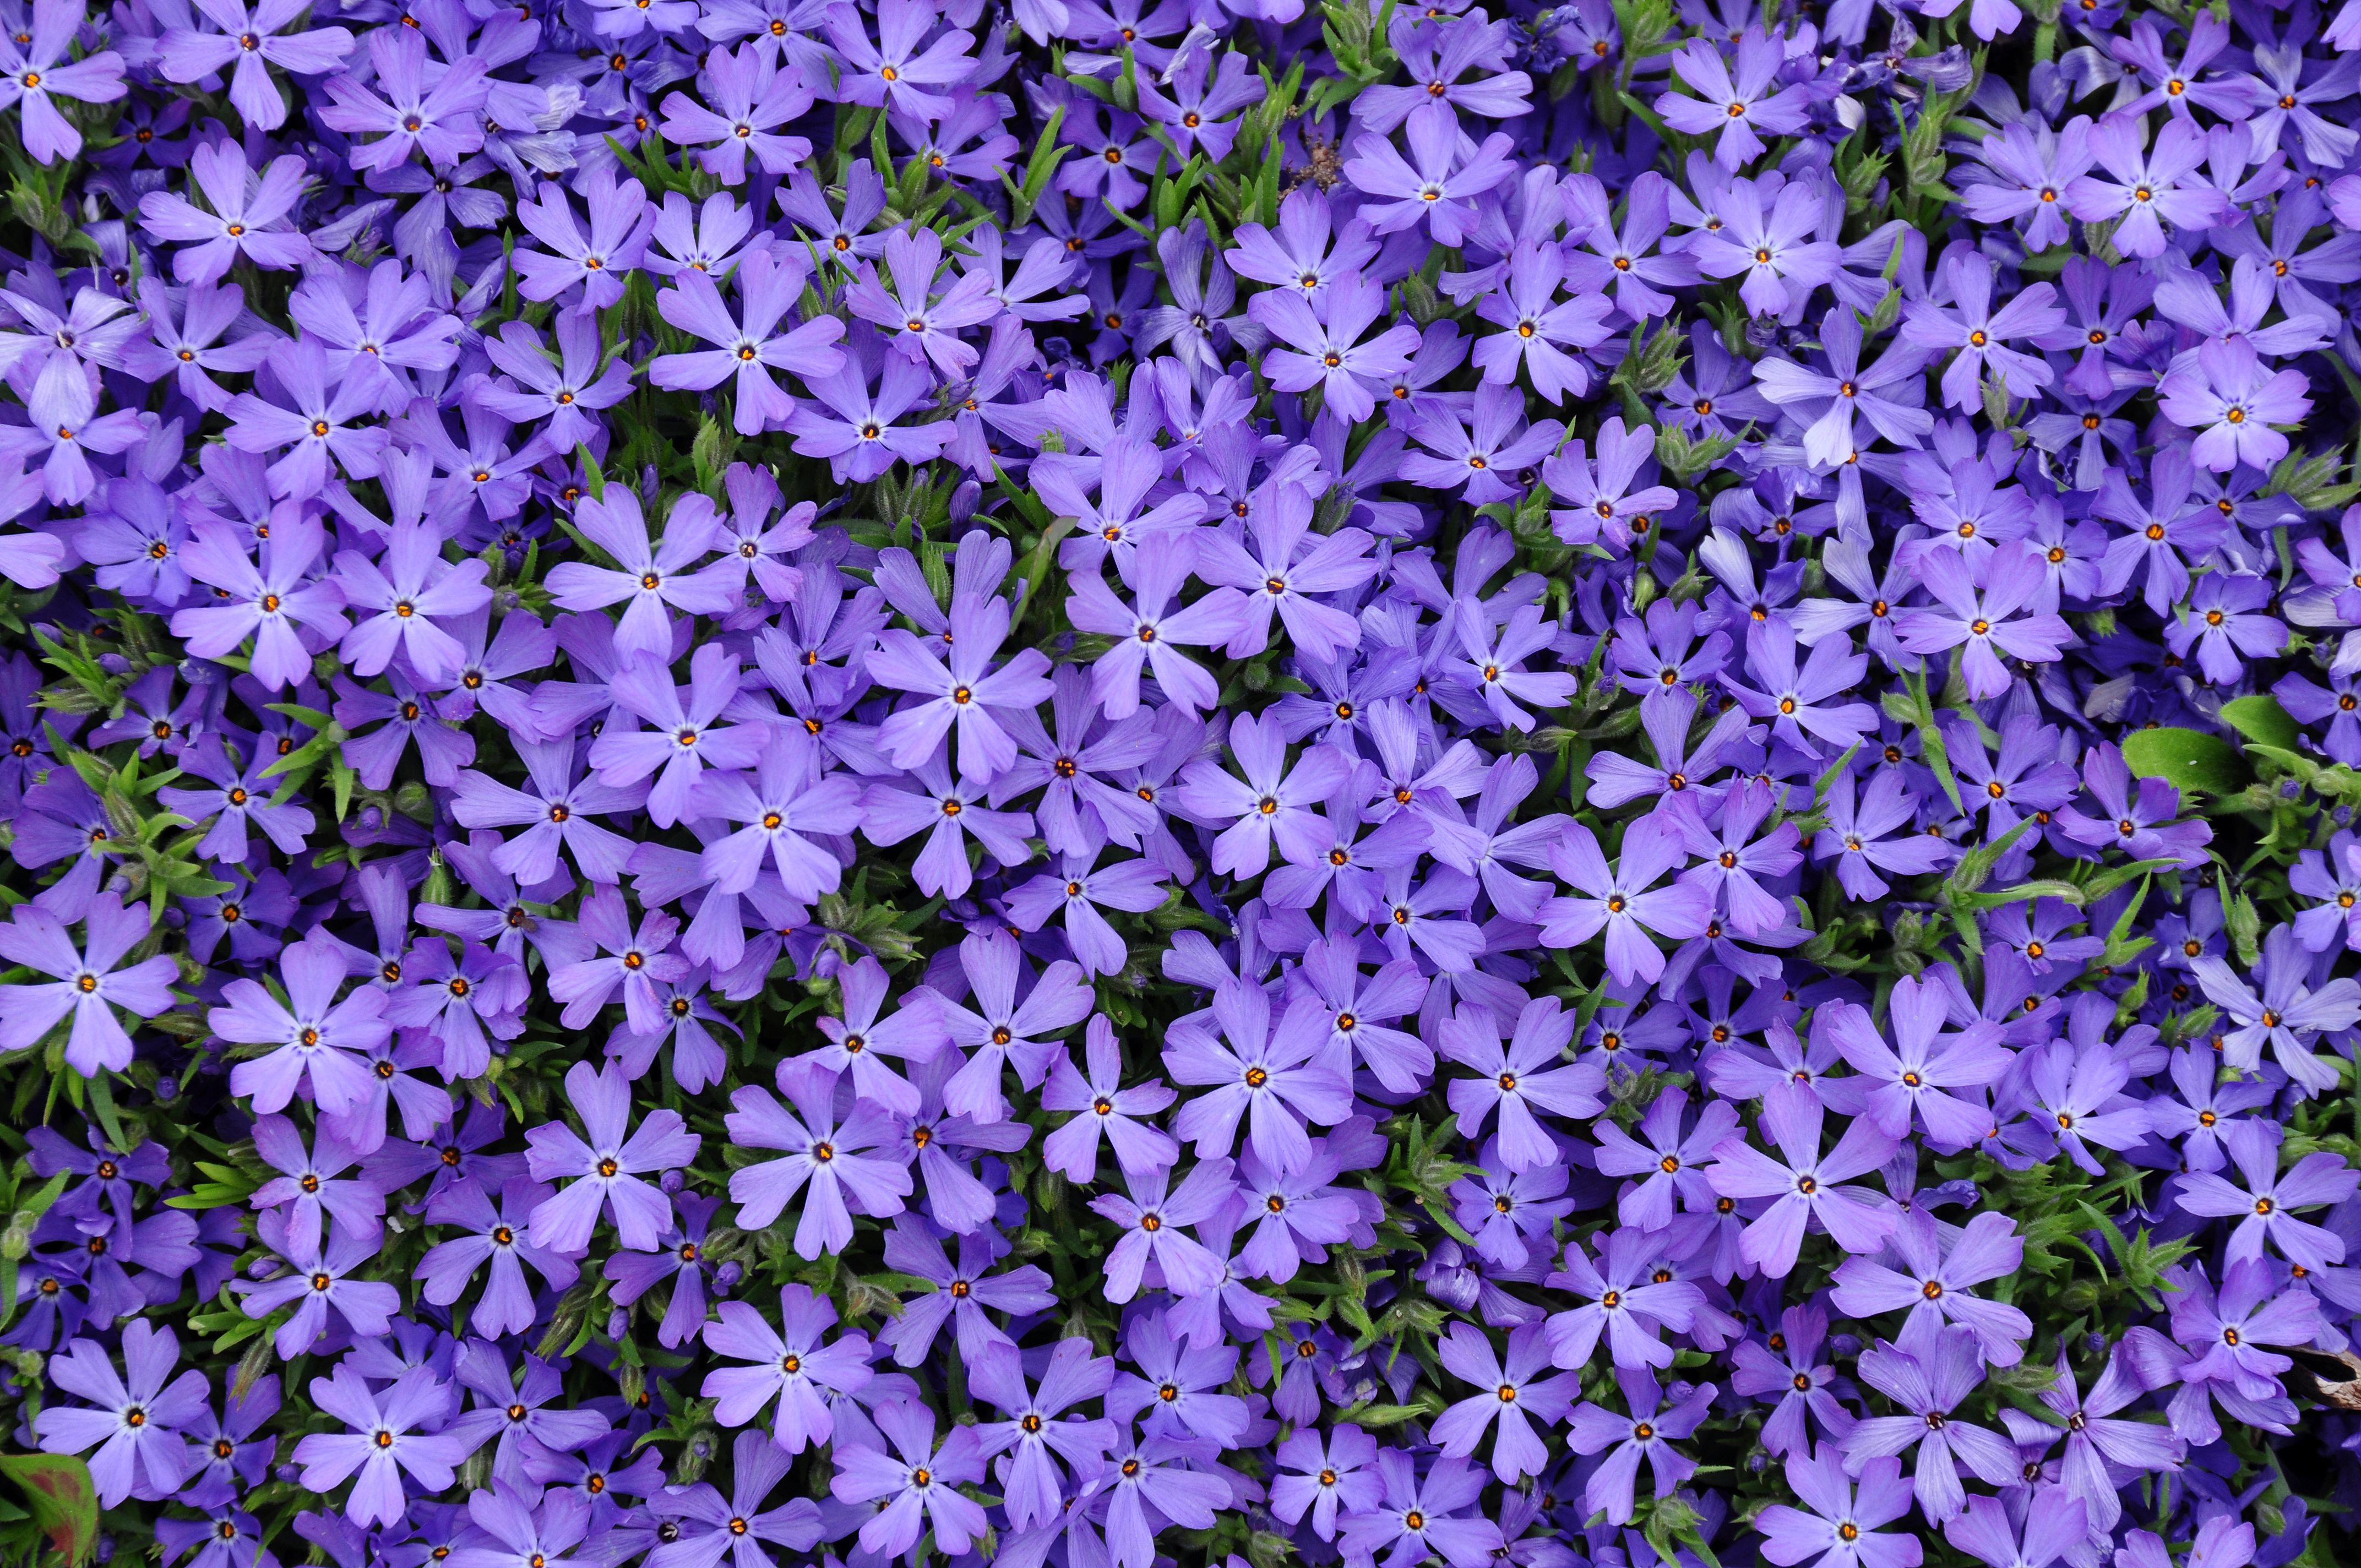 images/plants/phlox/phl-violet-pinwheels/phl-violet-pinwheels-0004.jpg